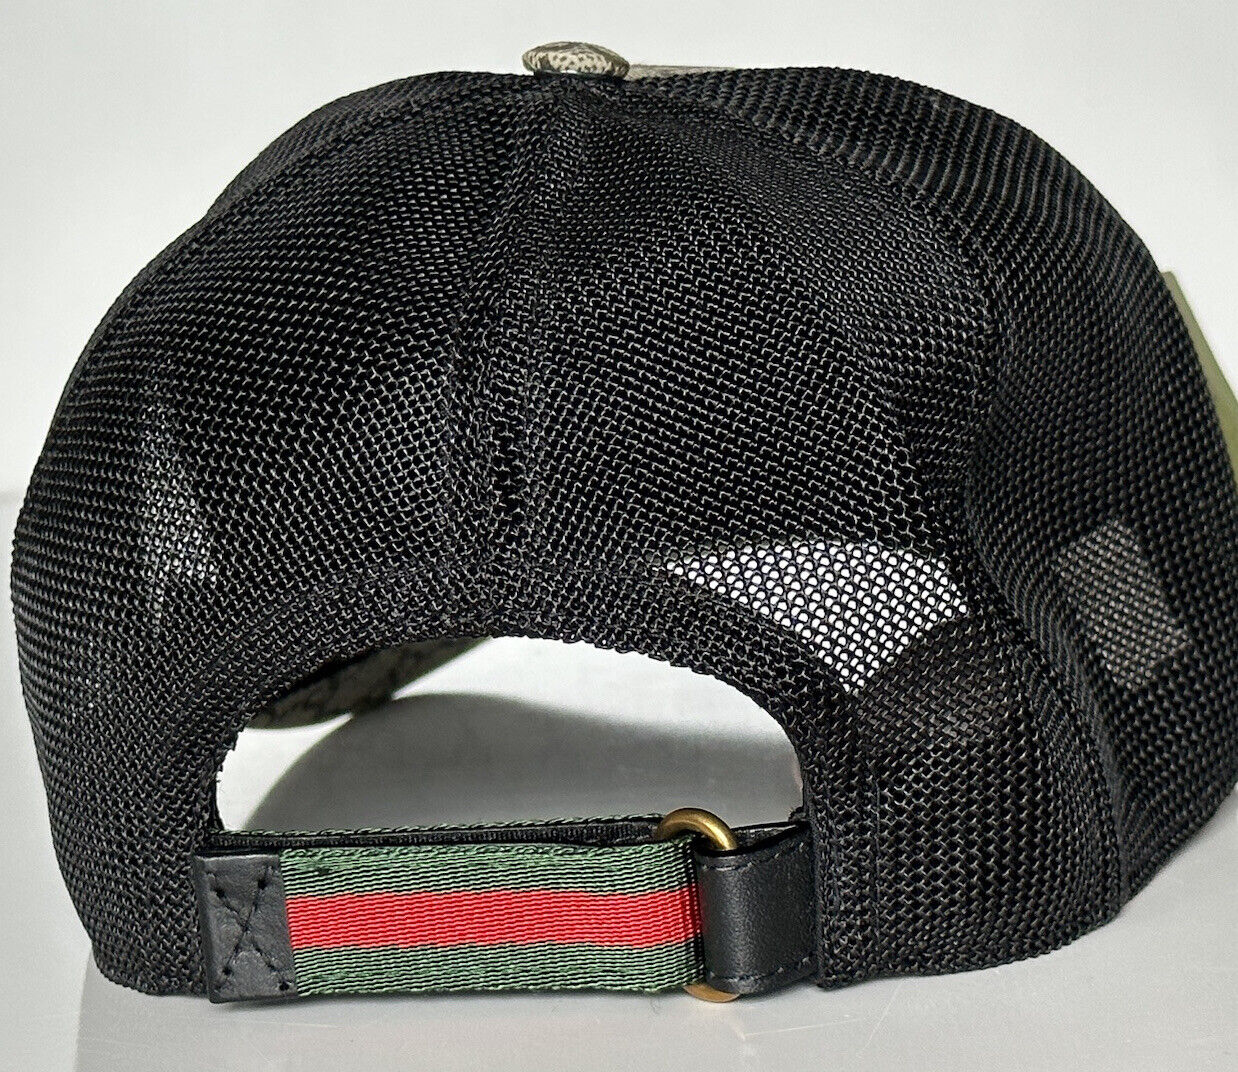 NWT Gucci Tiger GG Print Baseball Cap Brown Hat Medium Made in Italy 426887